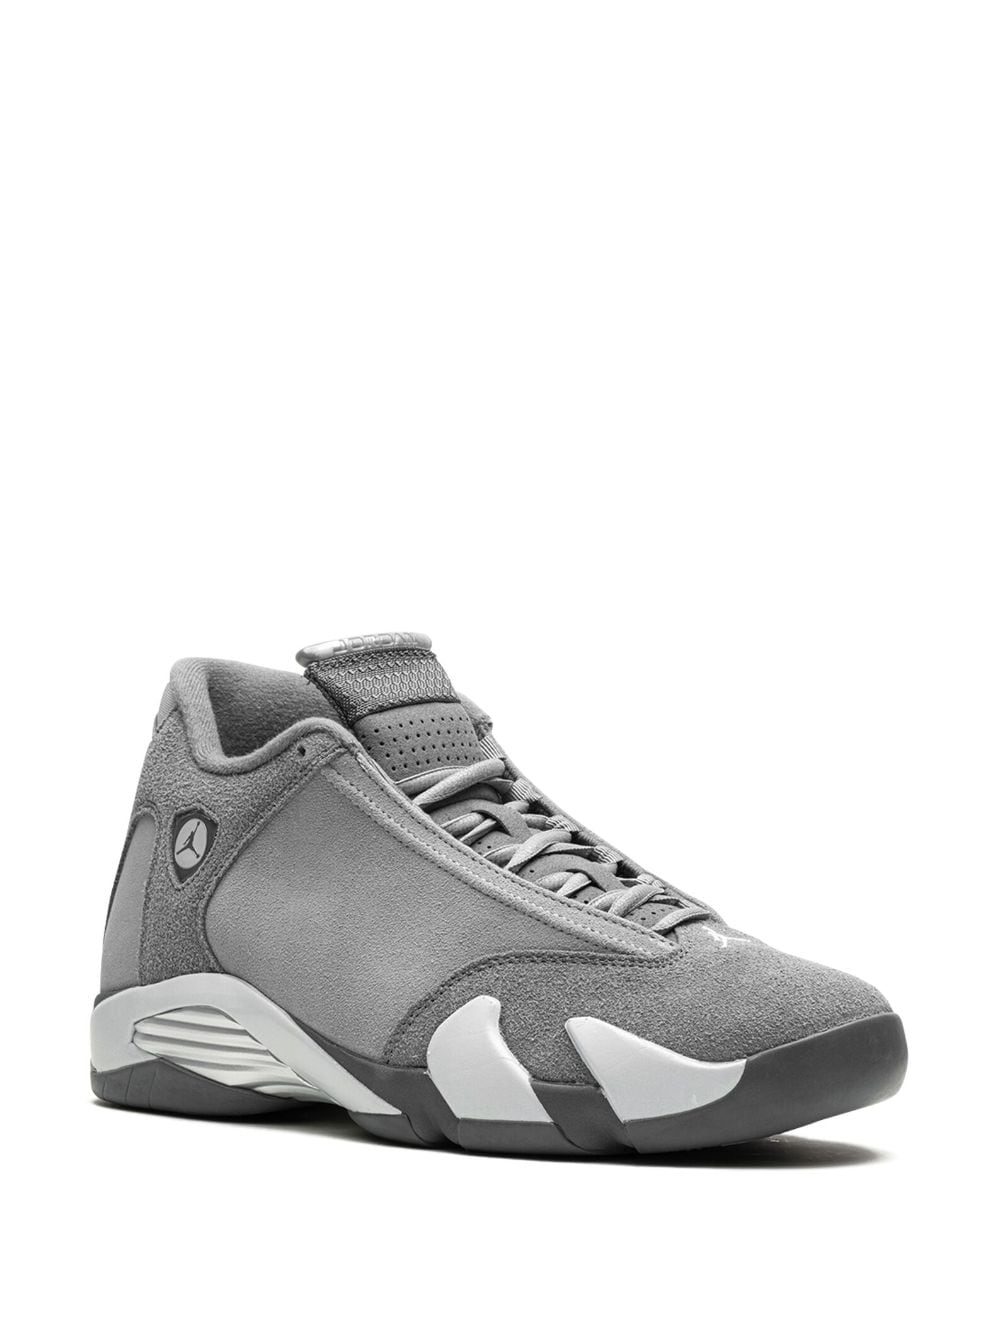 Image 2 of Jordan Air Jordan 14 "Flint Grey" sneakers